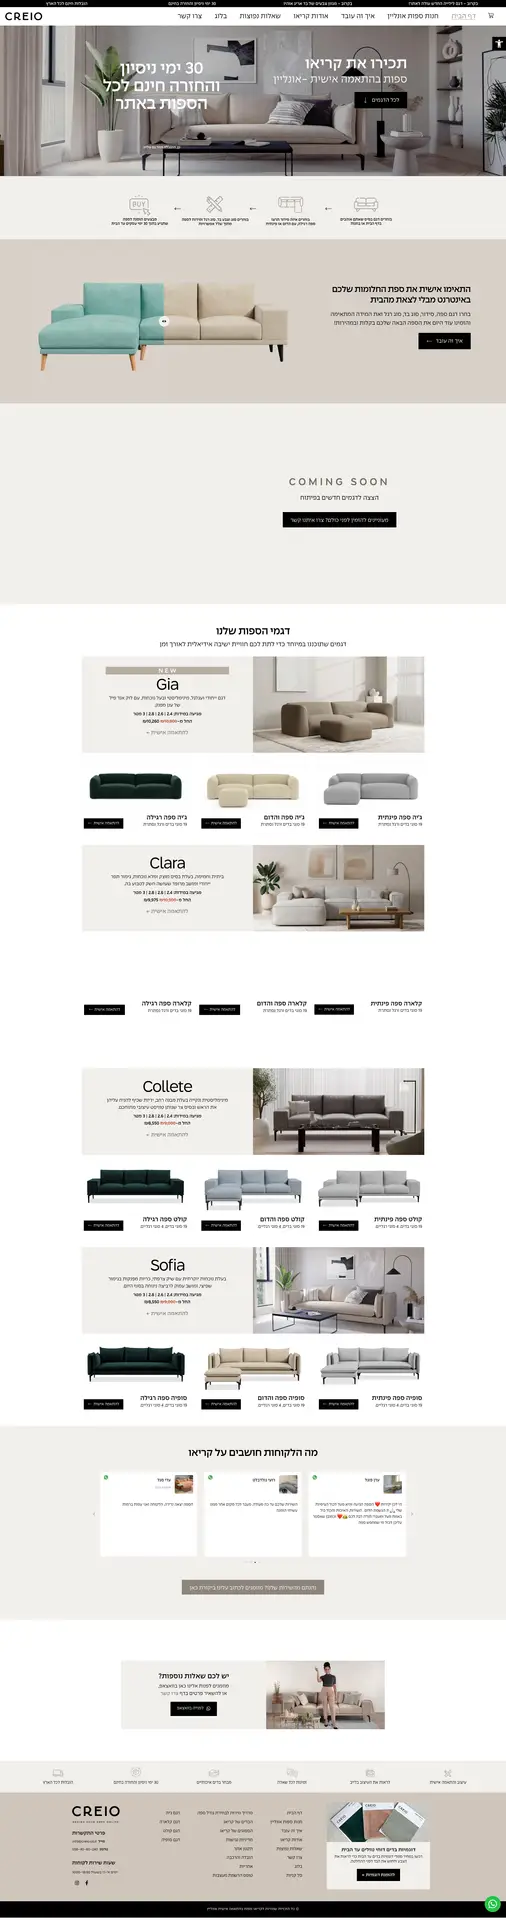 CREIO-Design-your-sofa-ONLINE-קריאו-ספות-בהתאמה-אישית-אונליין